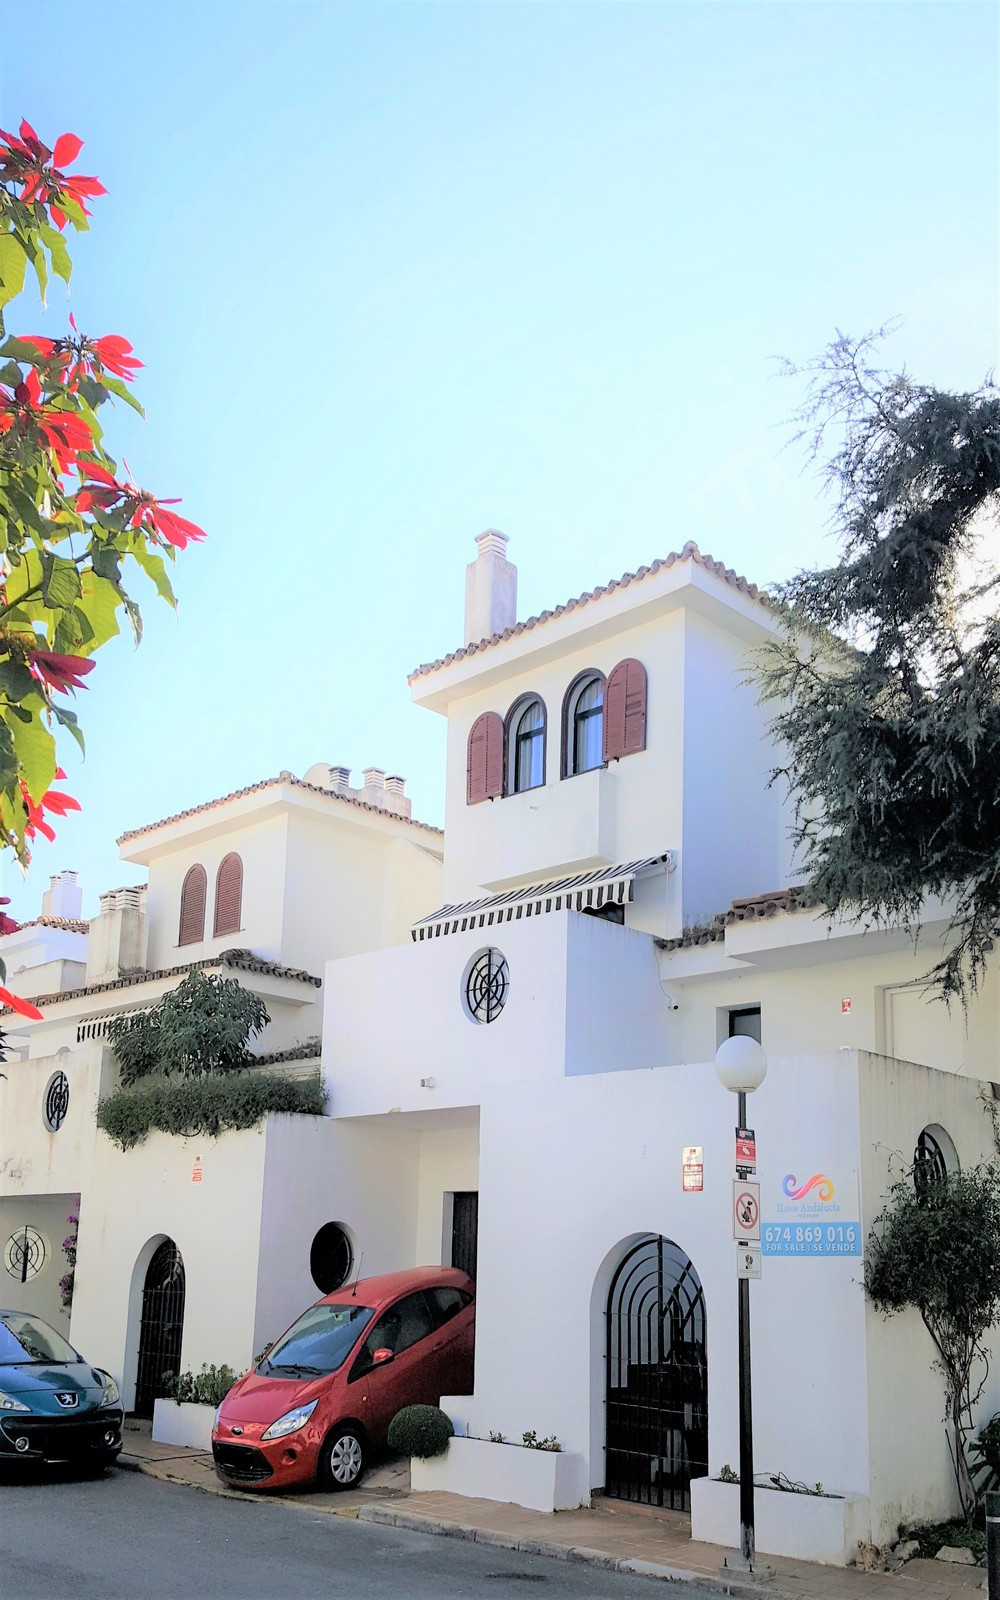 						Townhouse  Semi Detached
													for sale 
																			 in Estepona
					